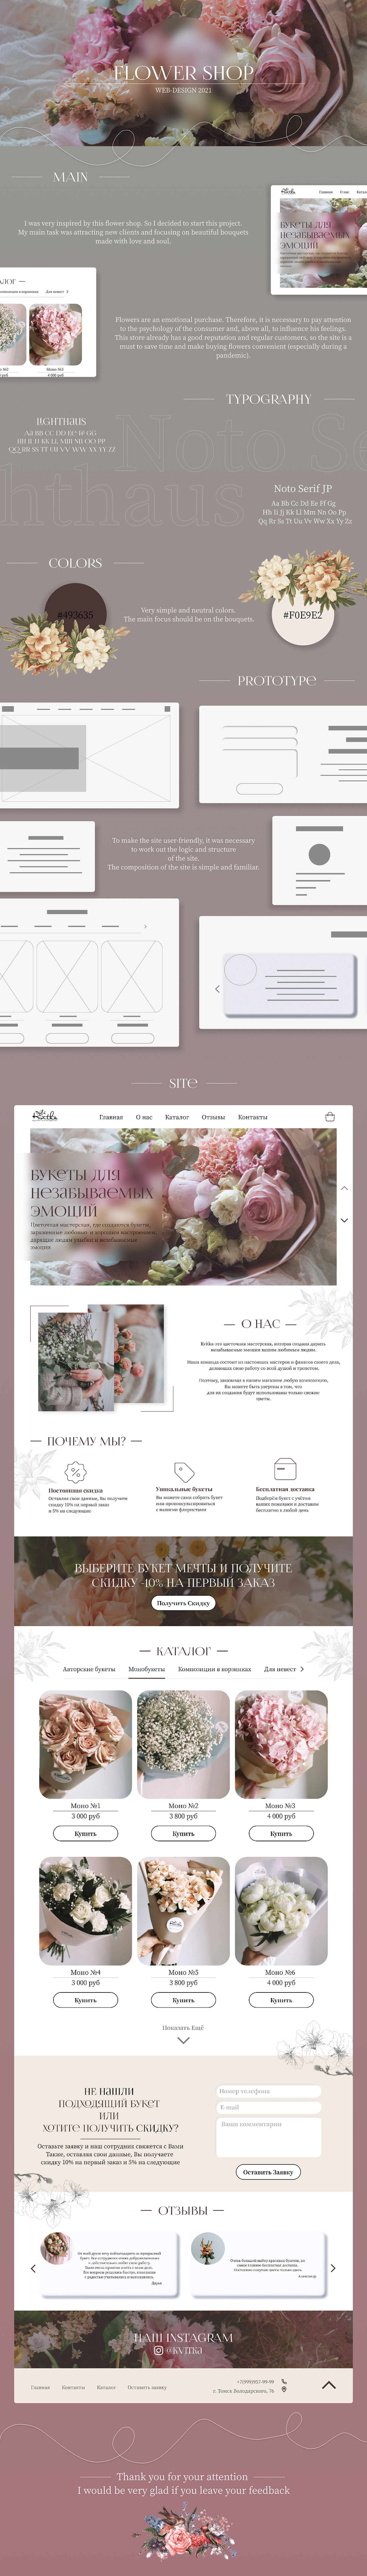 Ecommerce Flowers shop ux/ui Web Design  Website landing page UI ux веб-дизайн